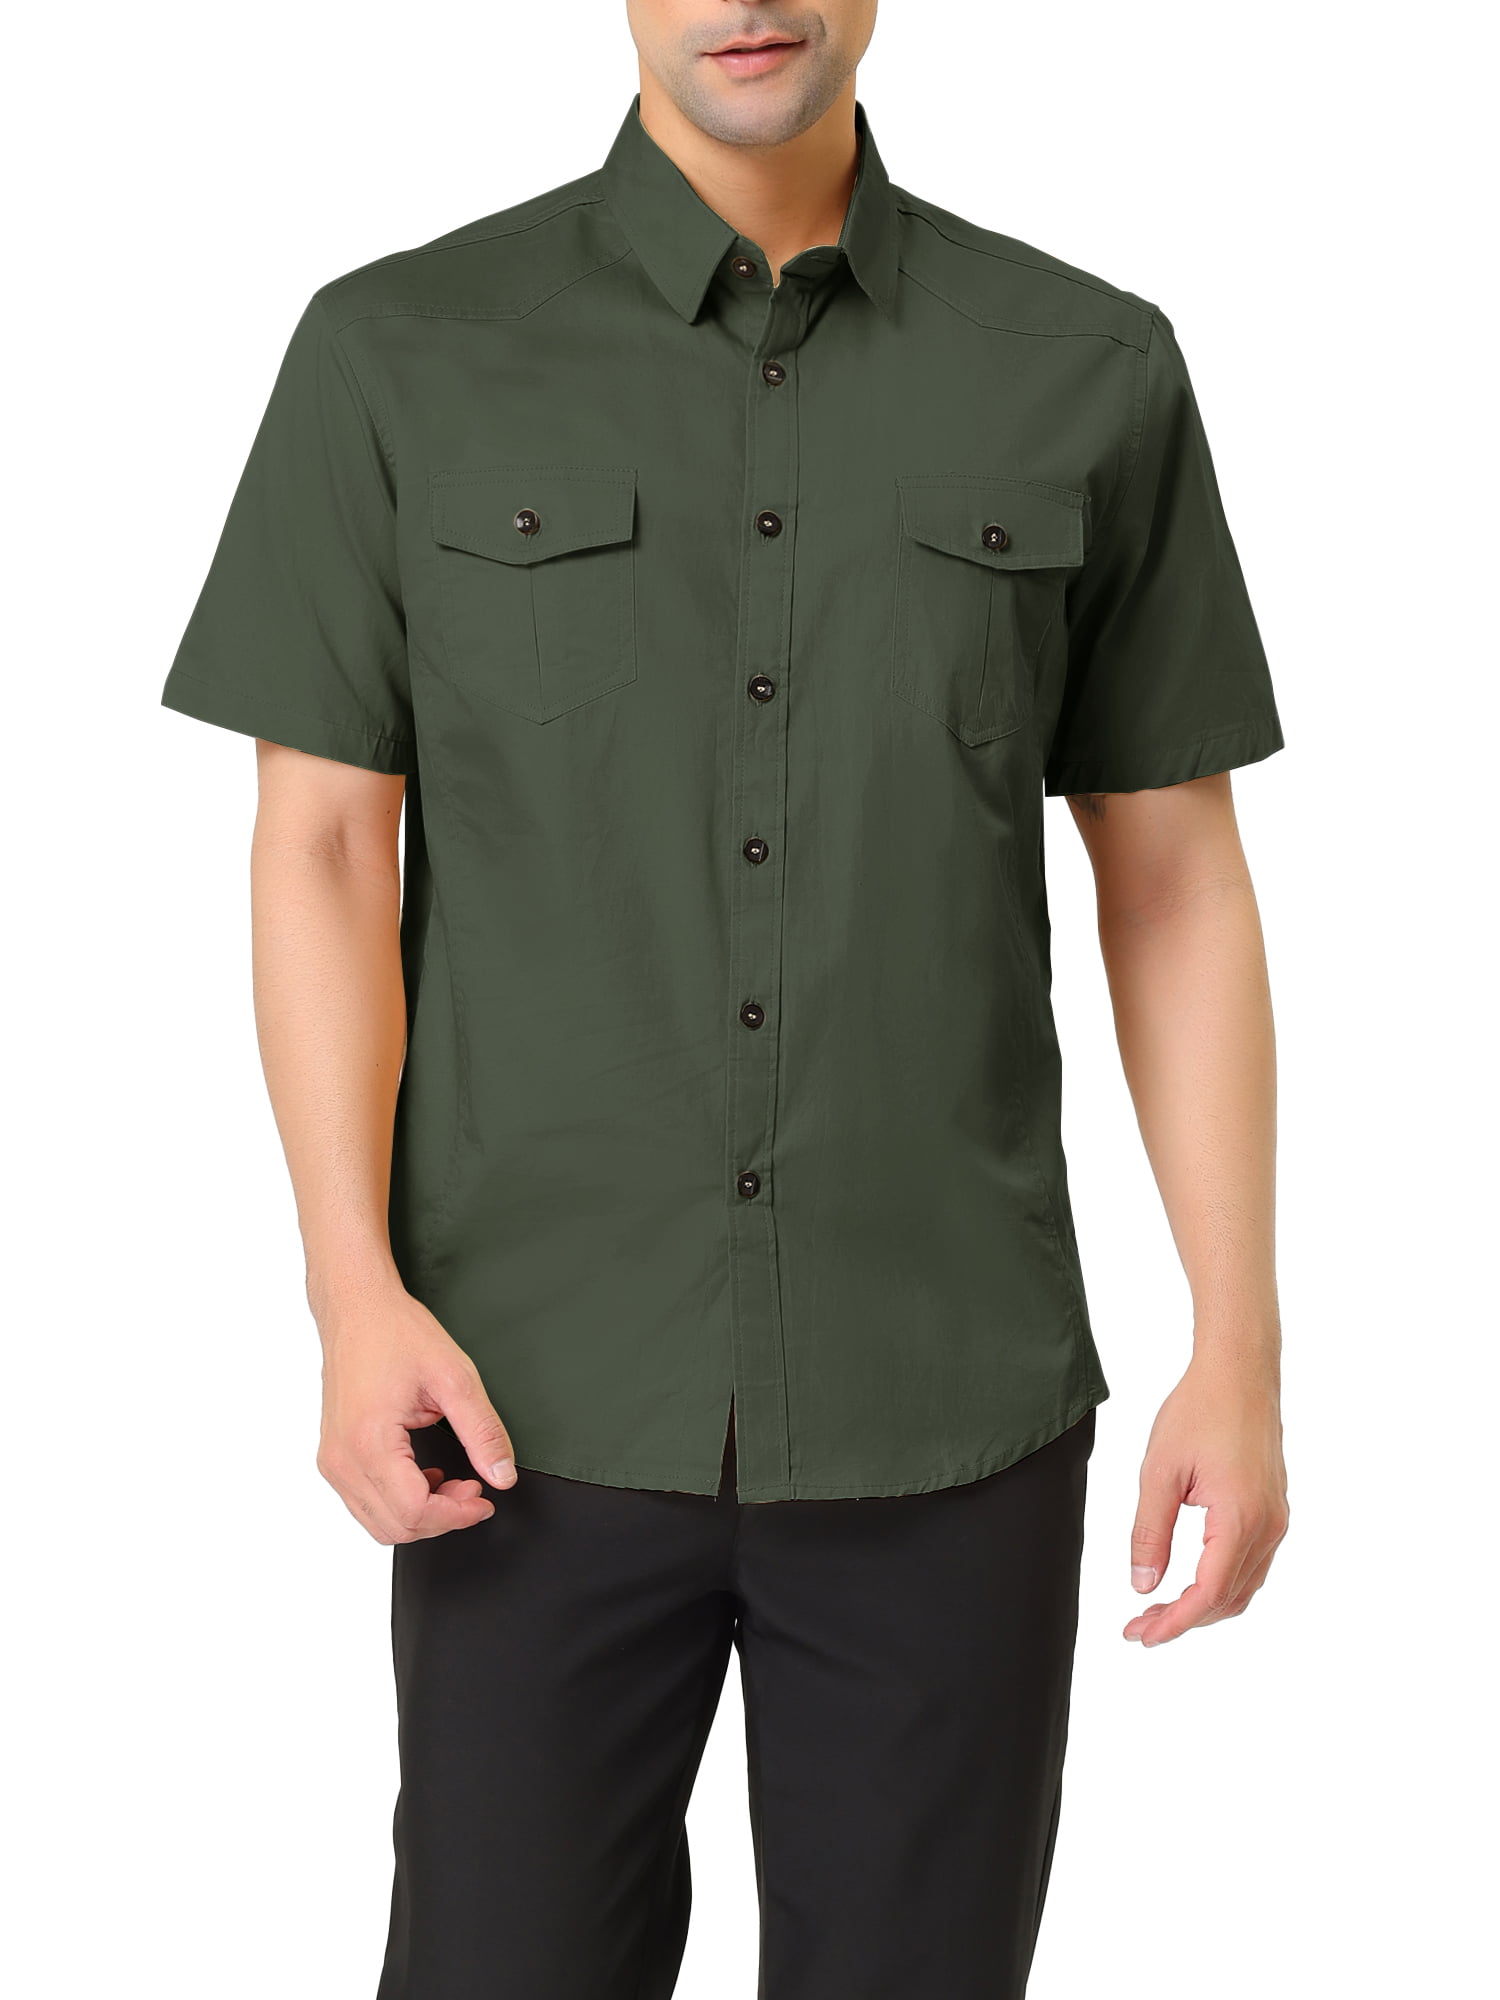 Lars Amadeus Men's Cargo Short Sleeves Button Down Safari Shirts